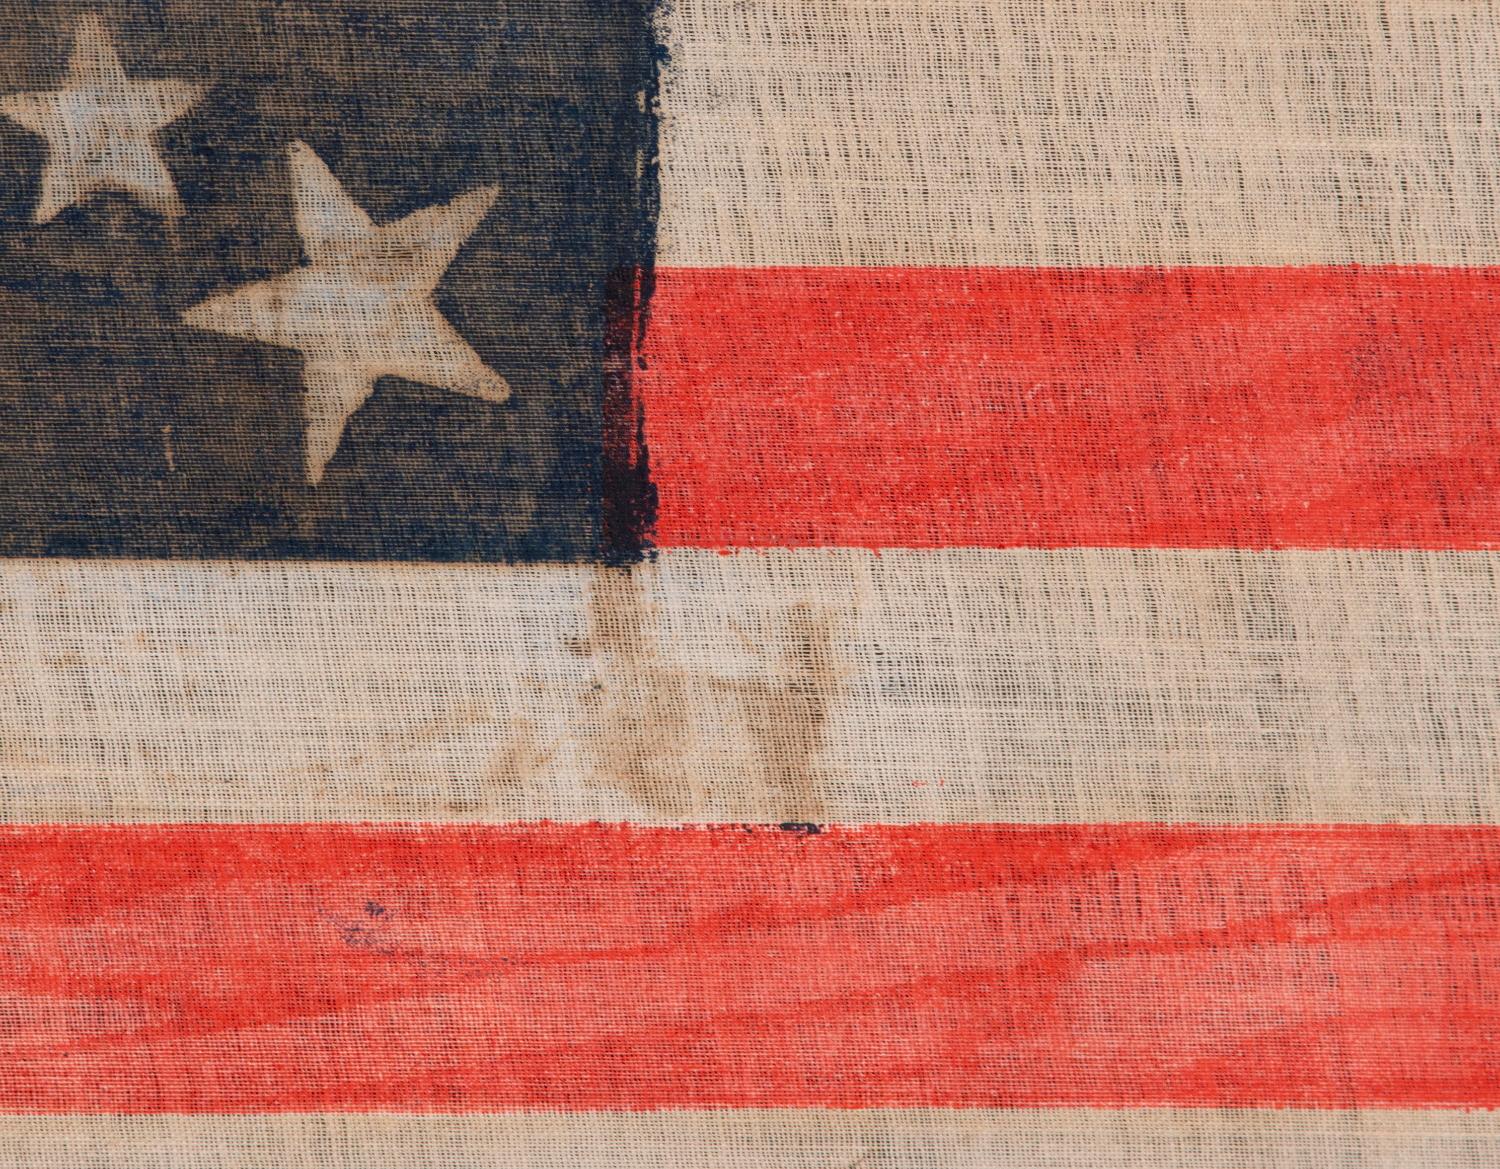 American 30 Star Flag, Pre-Civil War Ear, Haloed Center Star, Wisconsin Statehood